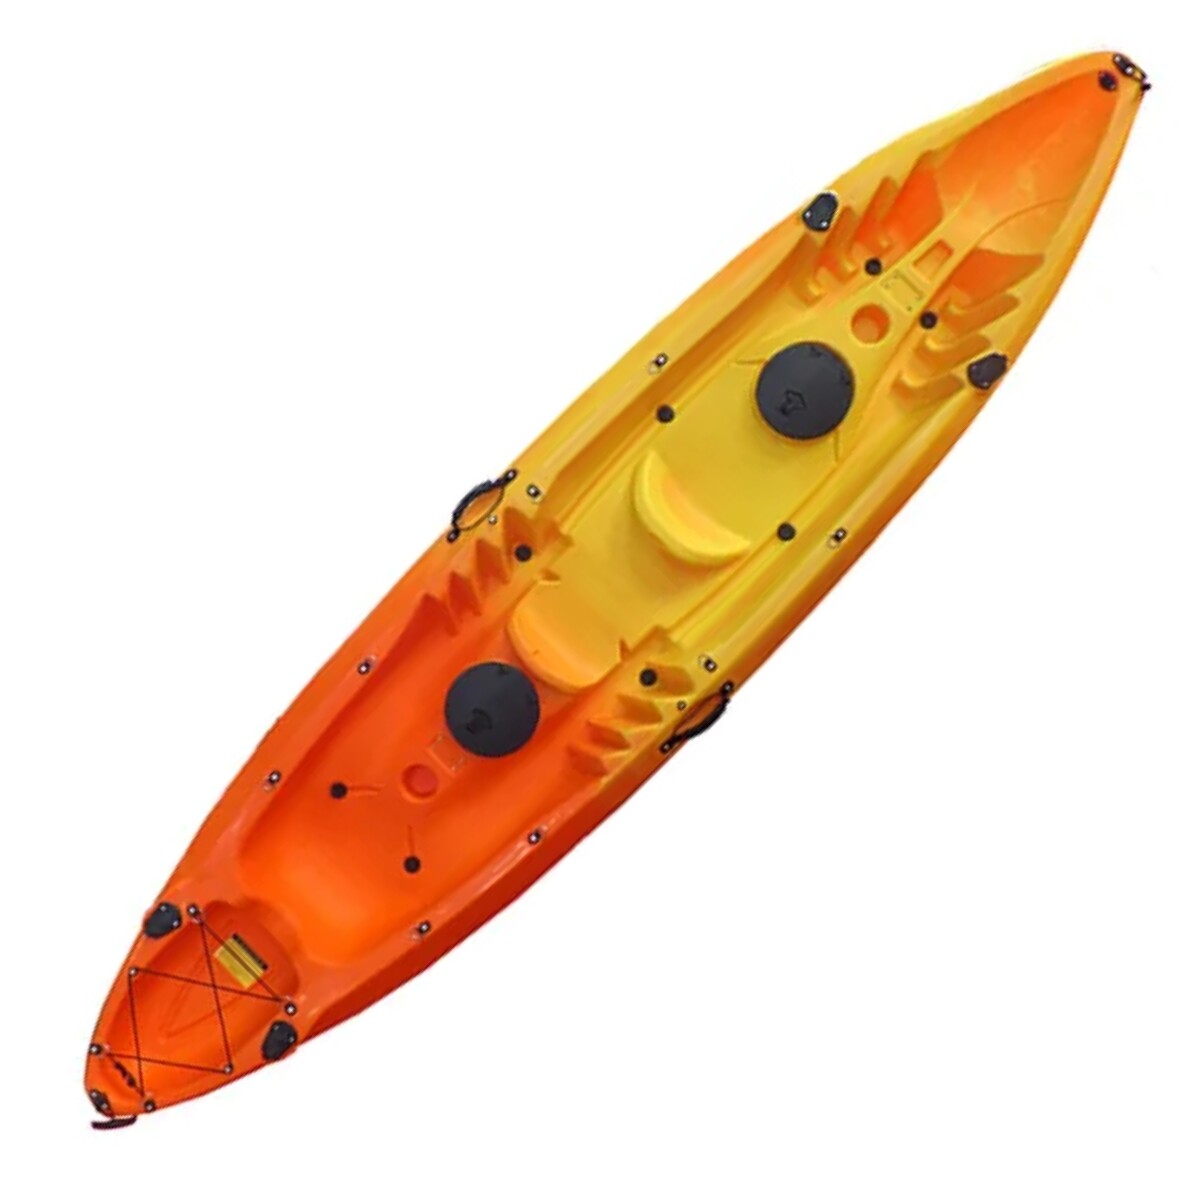 Kayak triplo 2 adultos + 1 niño - Naranja amarillo 